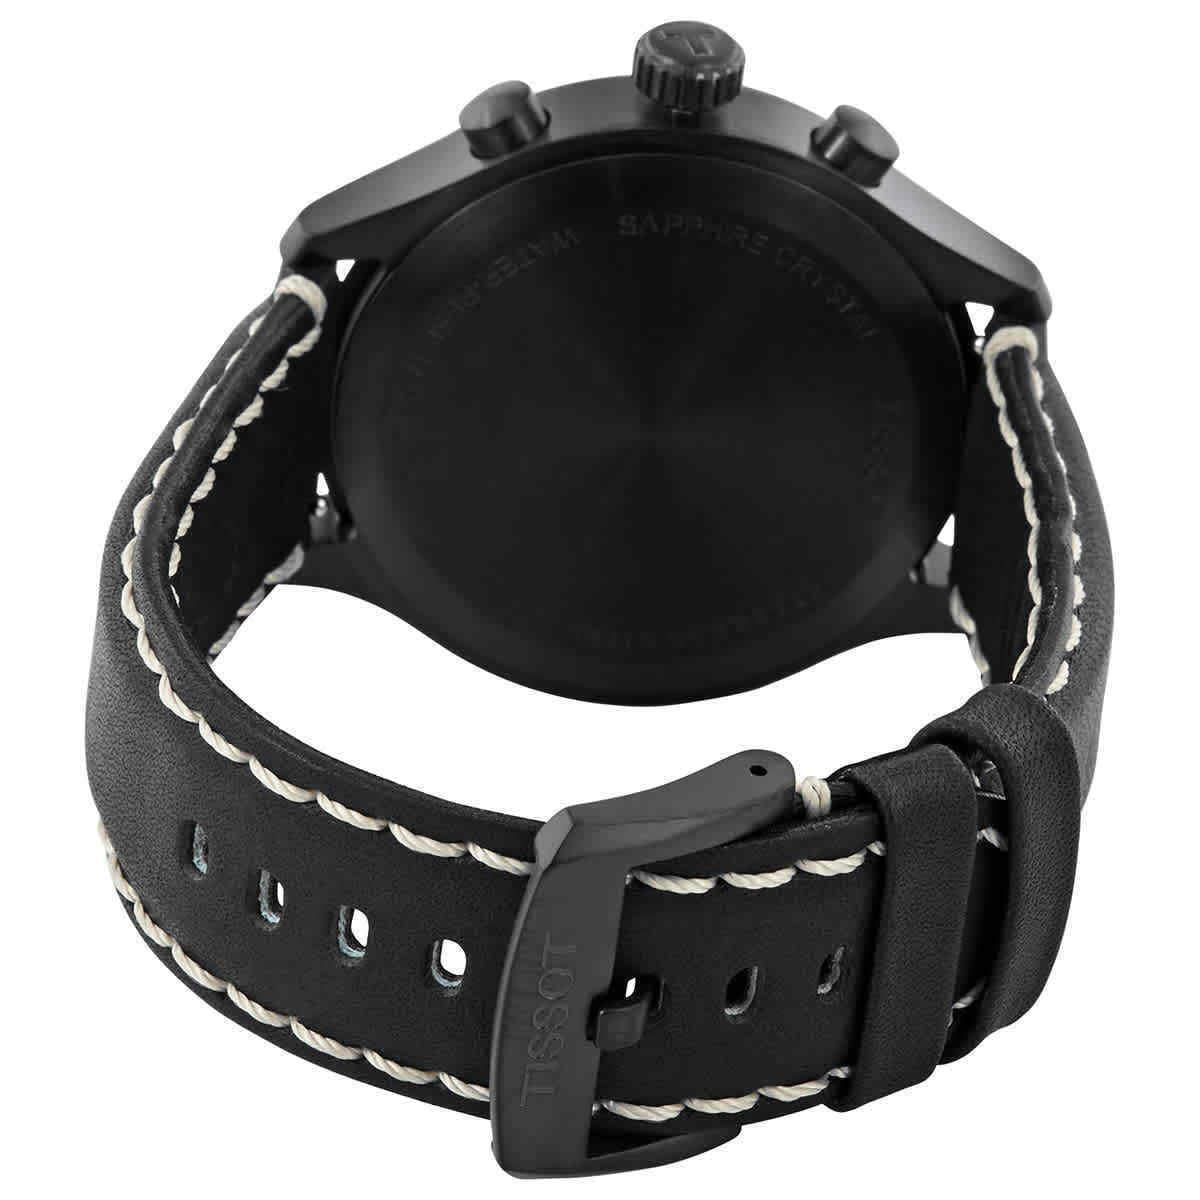 Tissot Chrono XL Vintage Chronograph Black Dial Black Leather Strap Watch For Men - T116.617.36.052.02